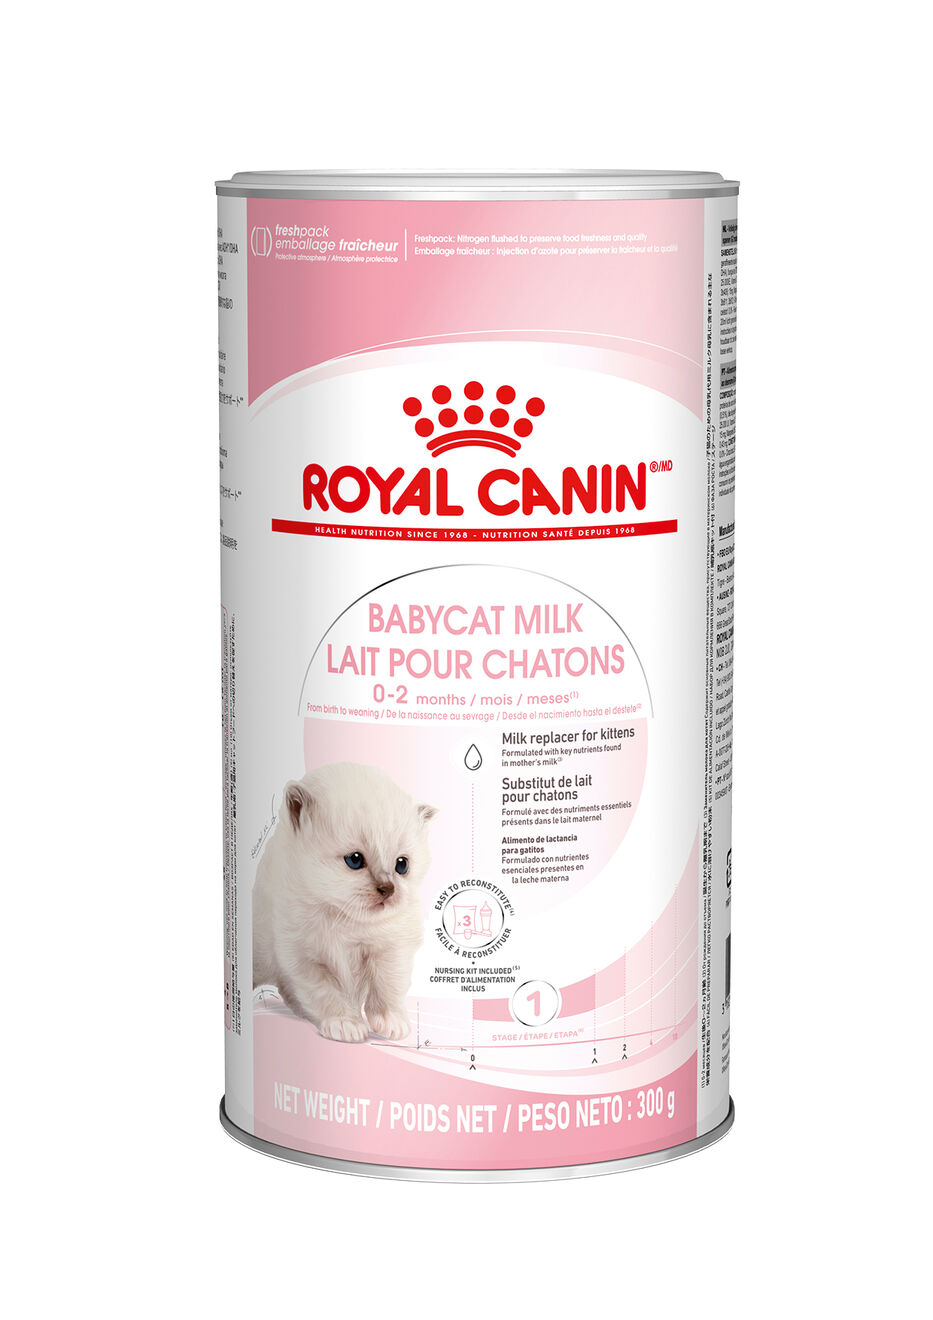 Babycat milk | Royal Canin UA